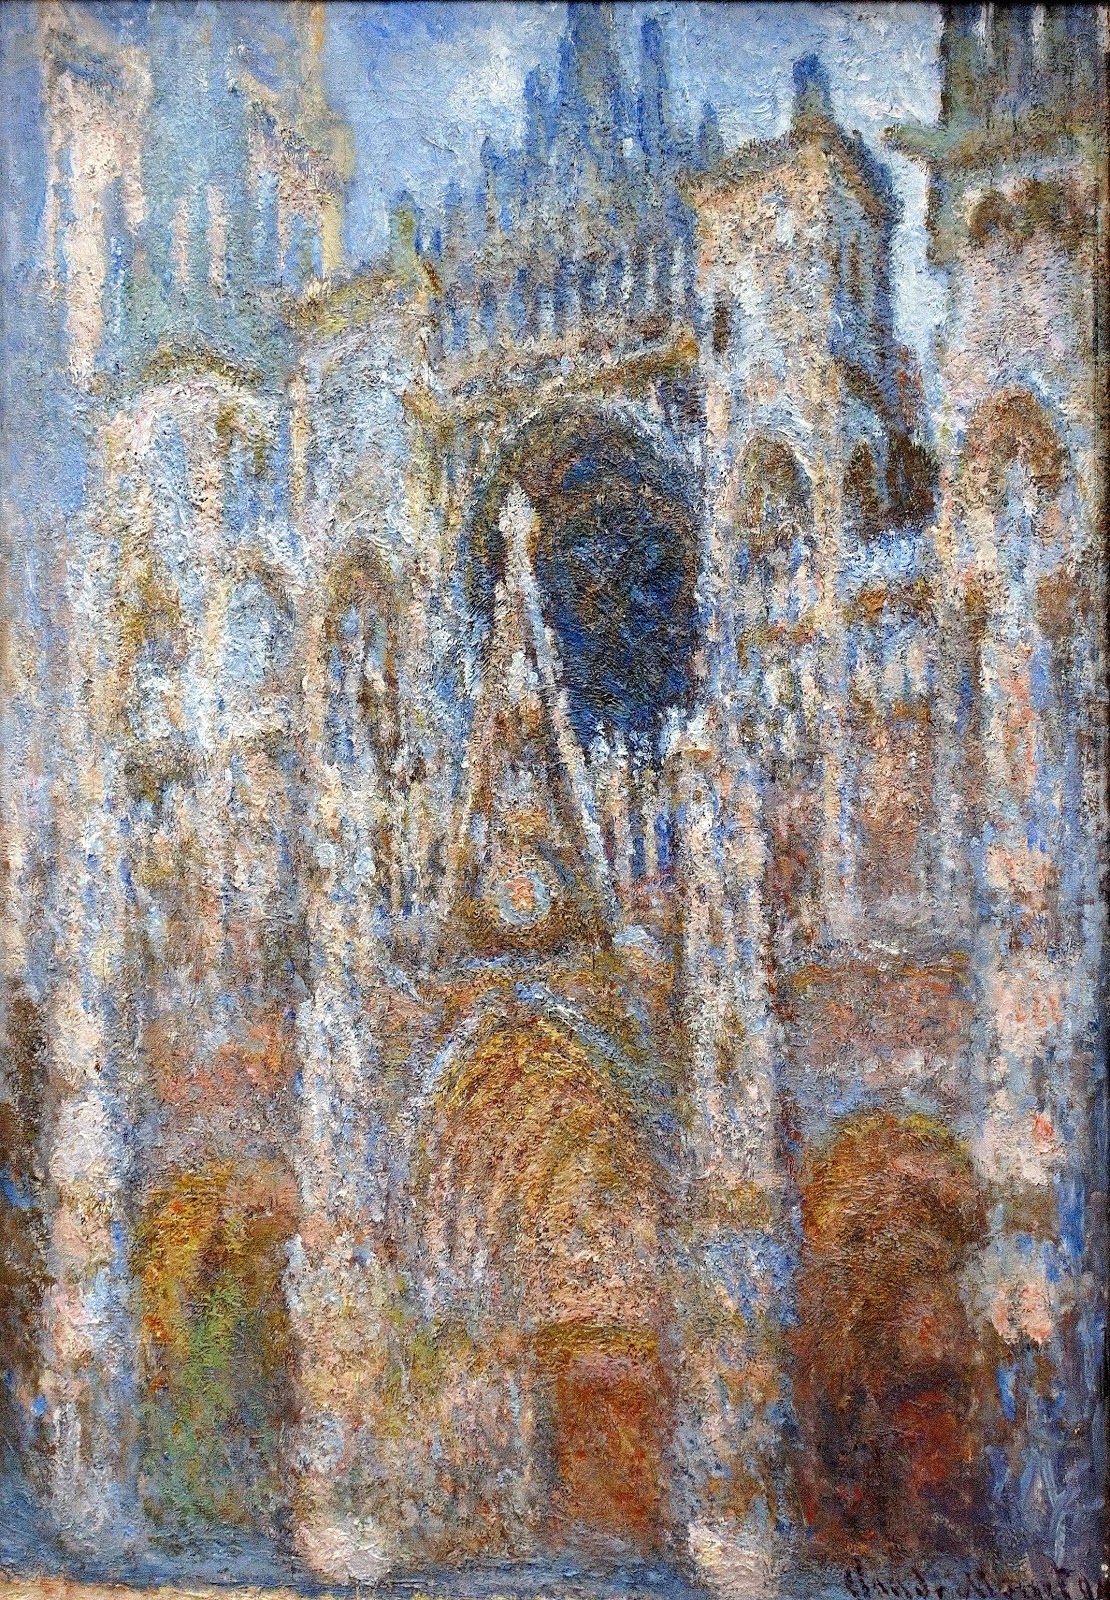 Claude+Monet-1840-1926 (621).jpg